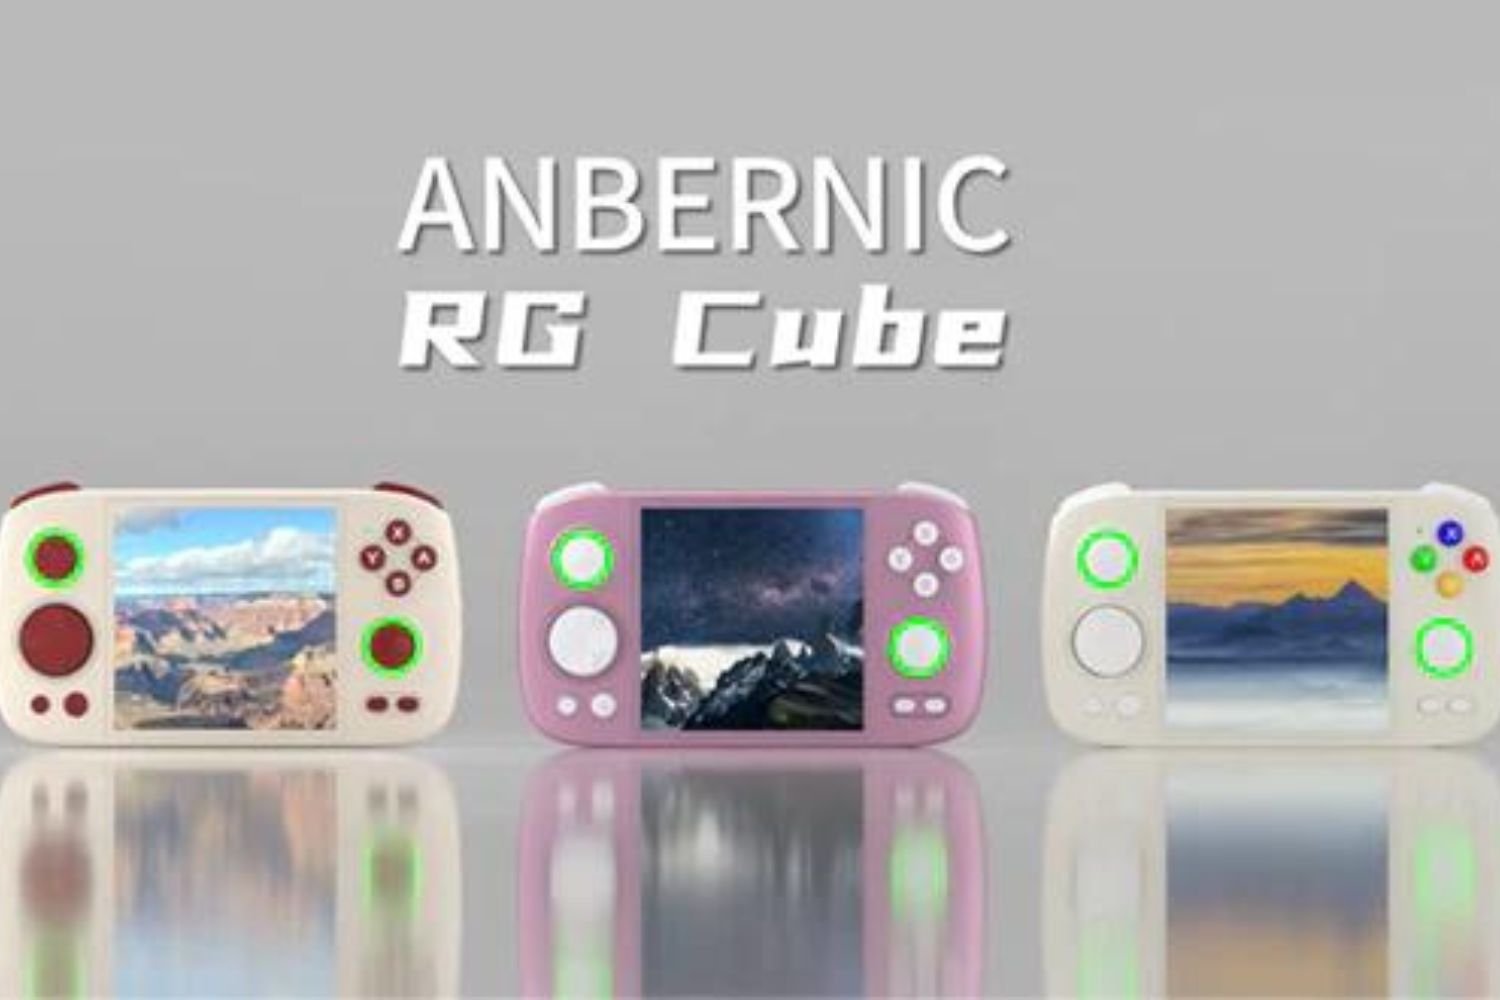 Anbernic Rg Cube Console